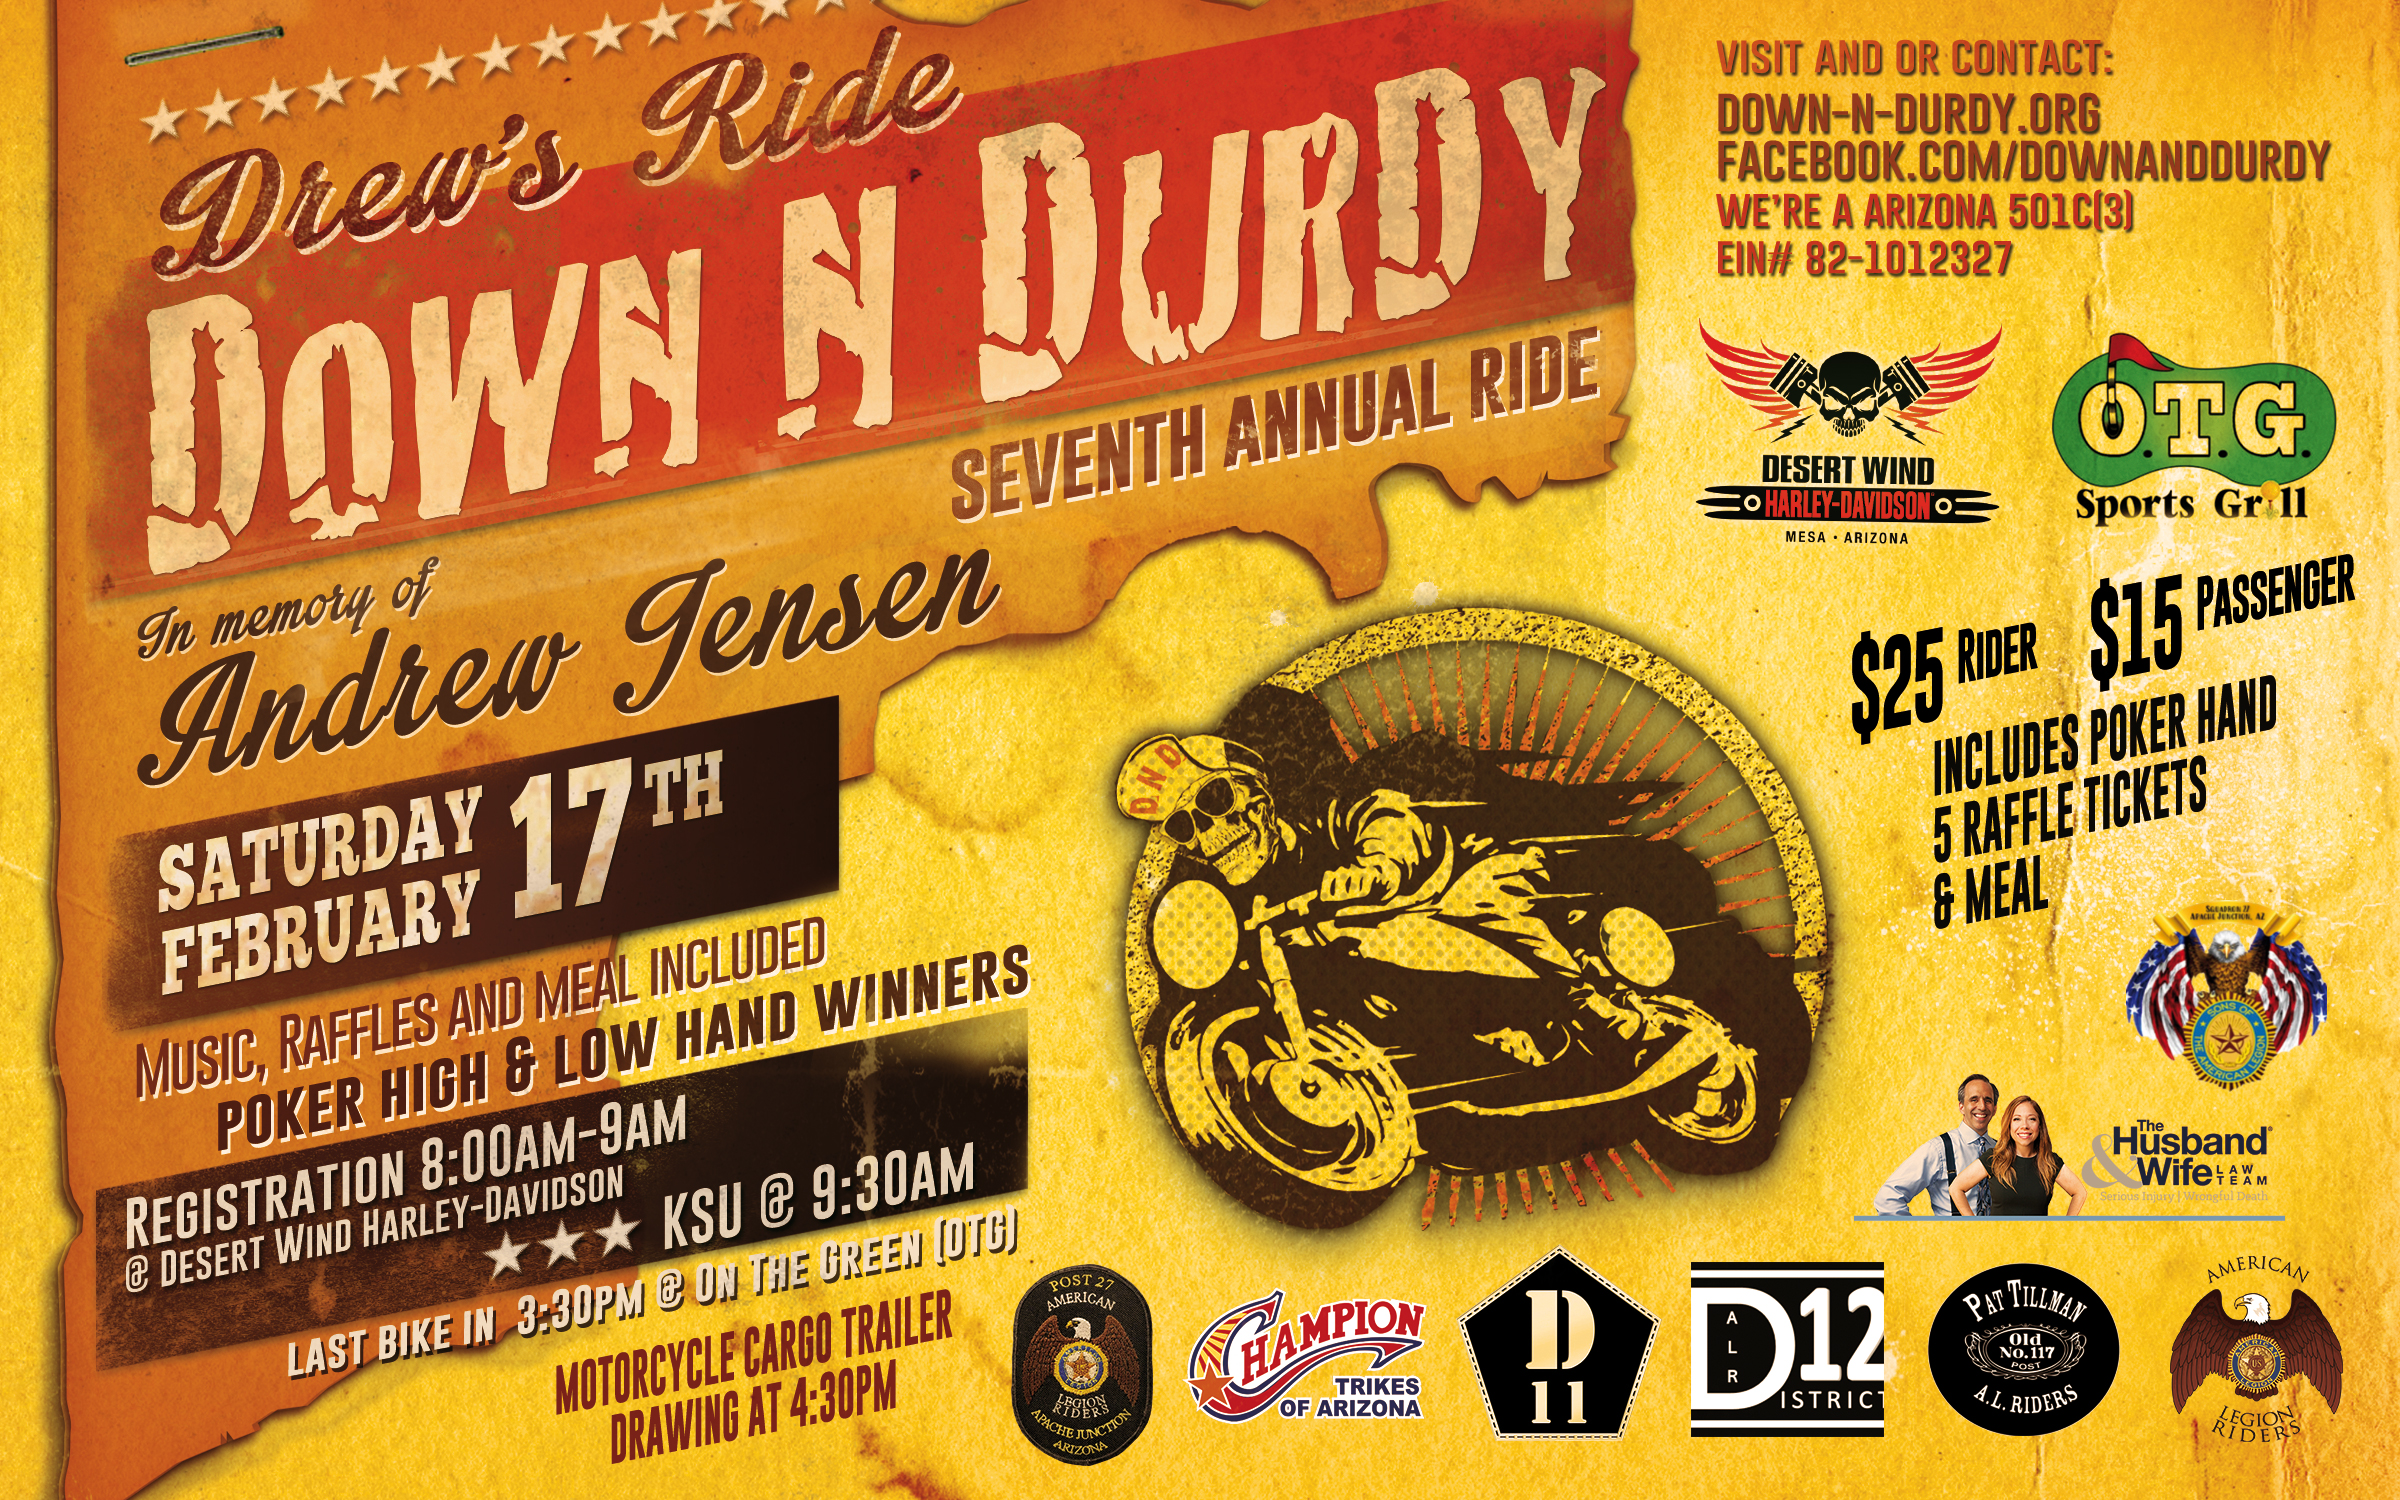 Drew's Ride, Down N Durdy, Seventh Annual Ride